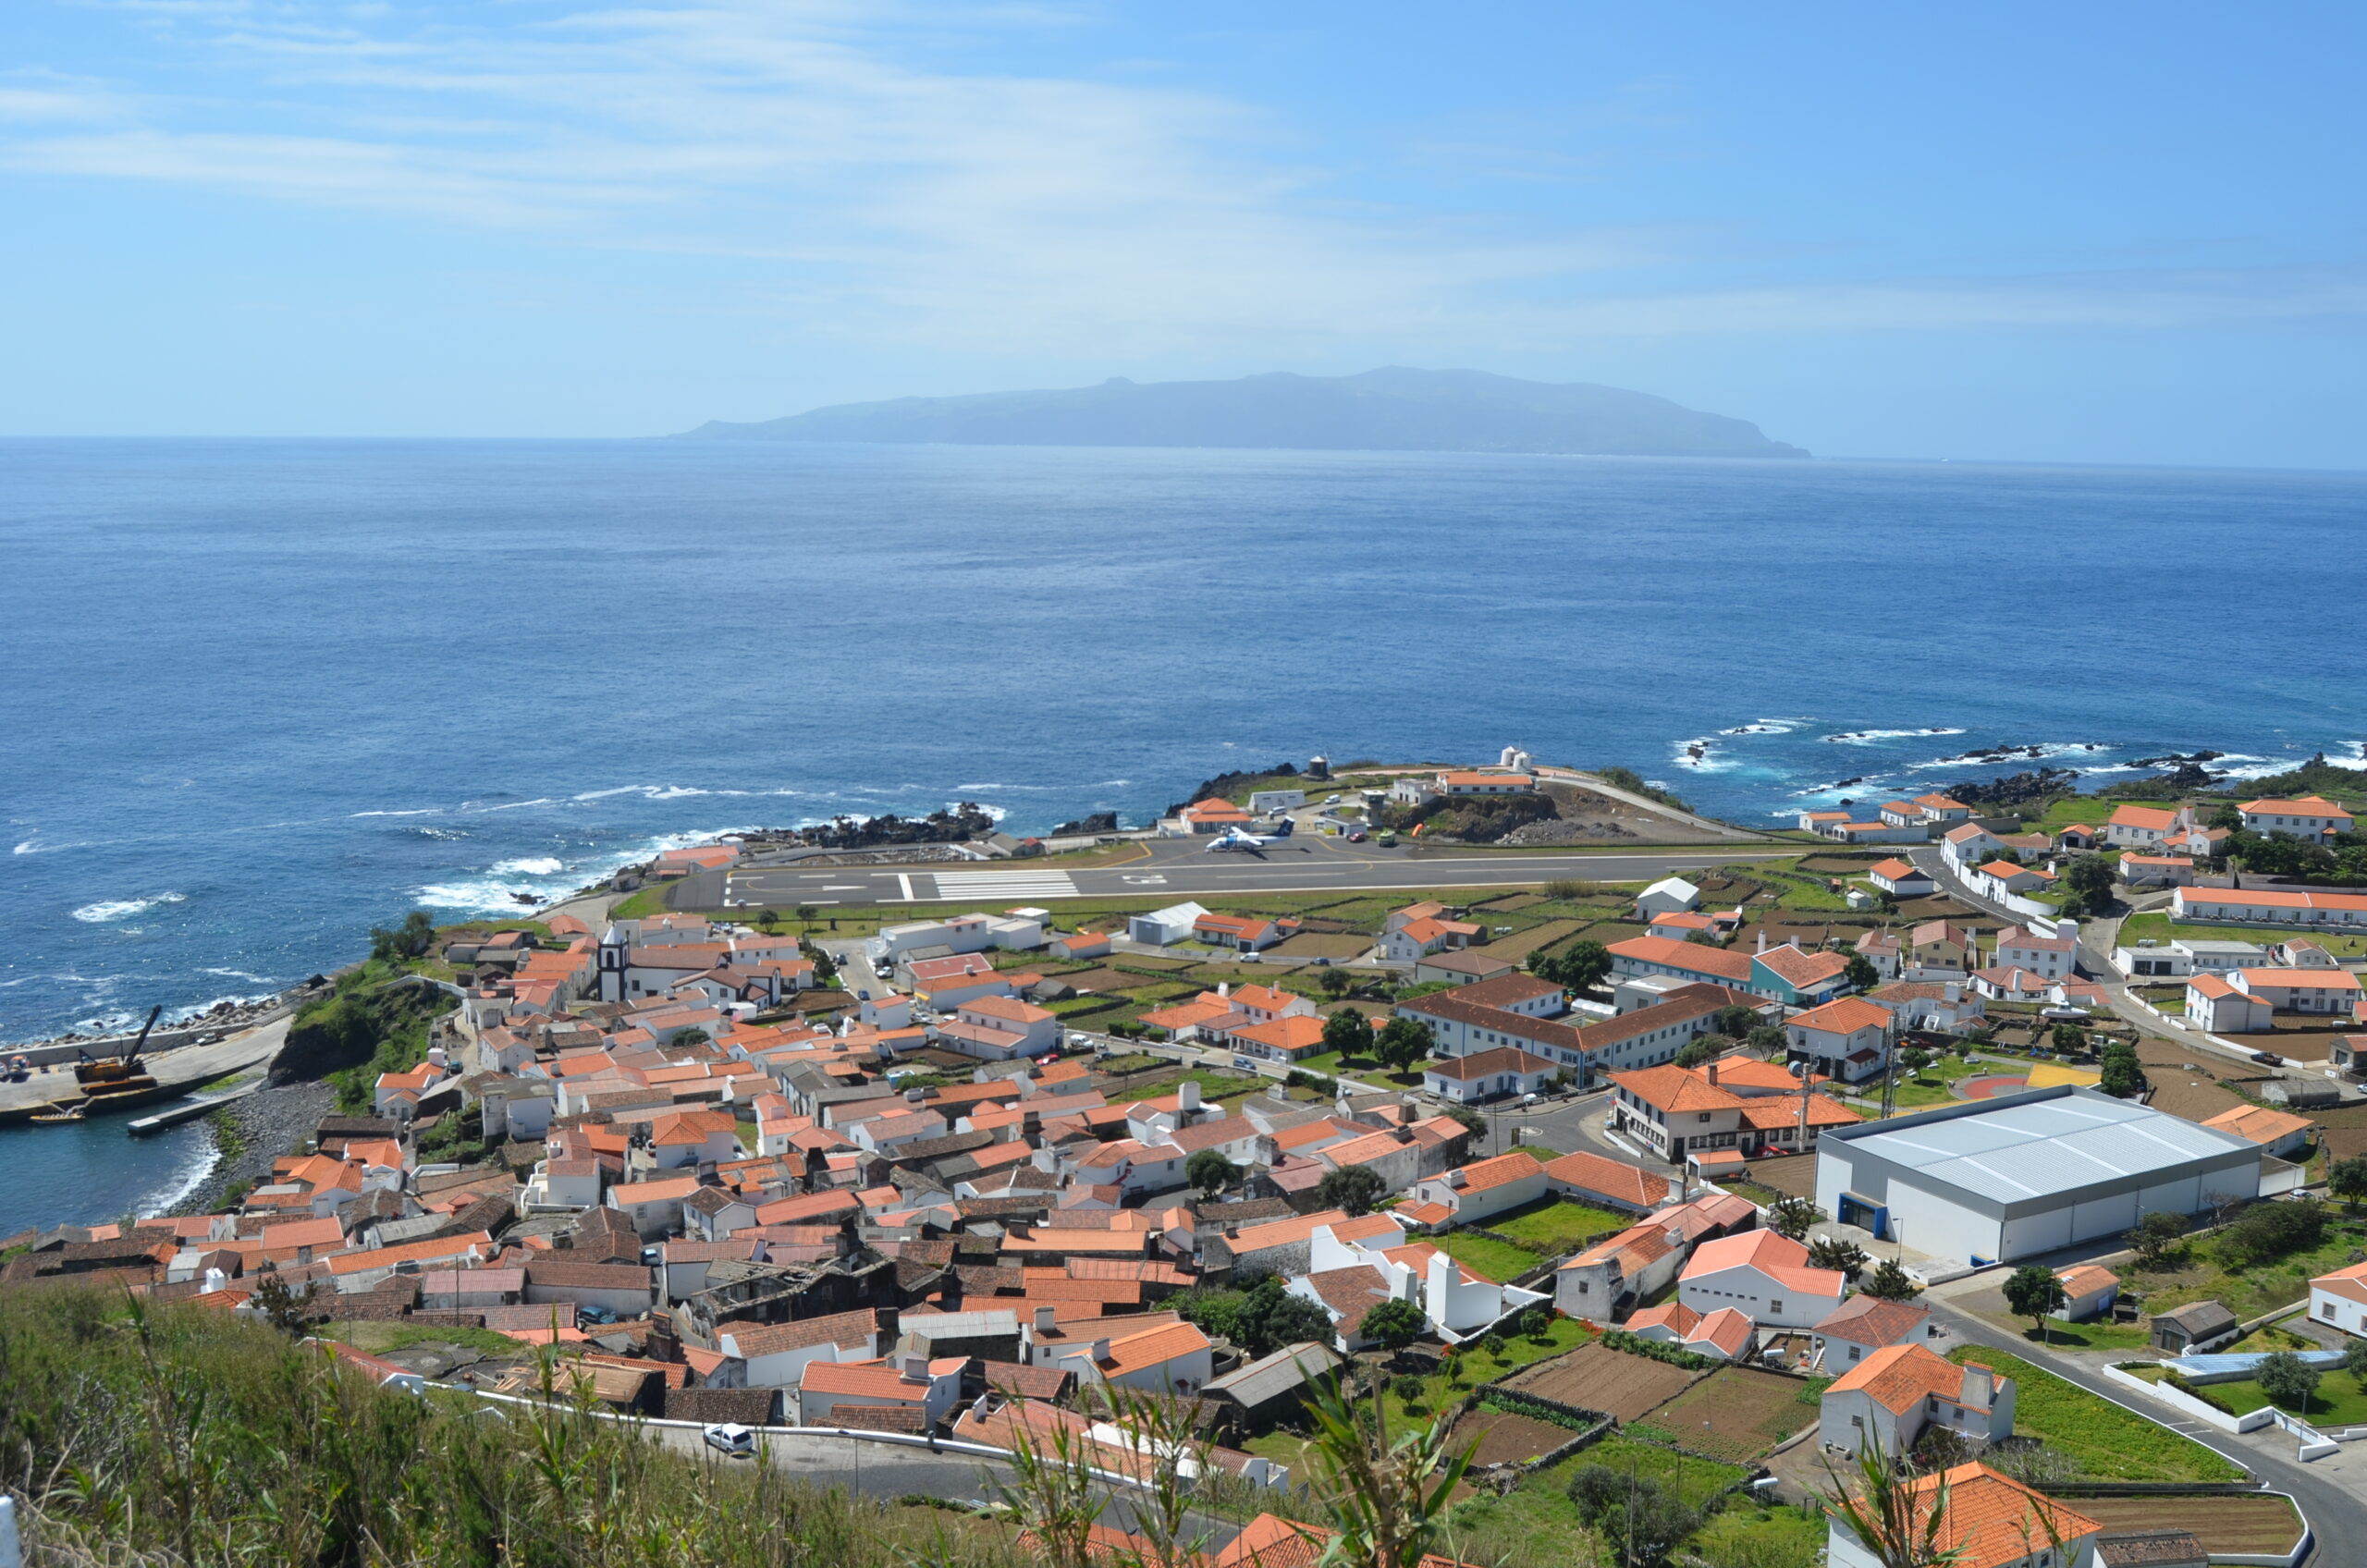 Corvo, Azores, Portugal Most Remote Cities in the World